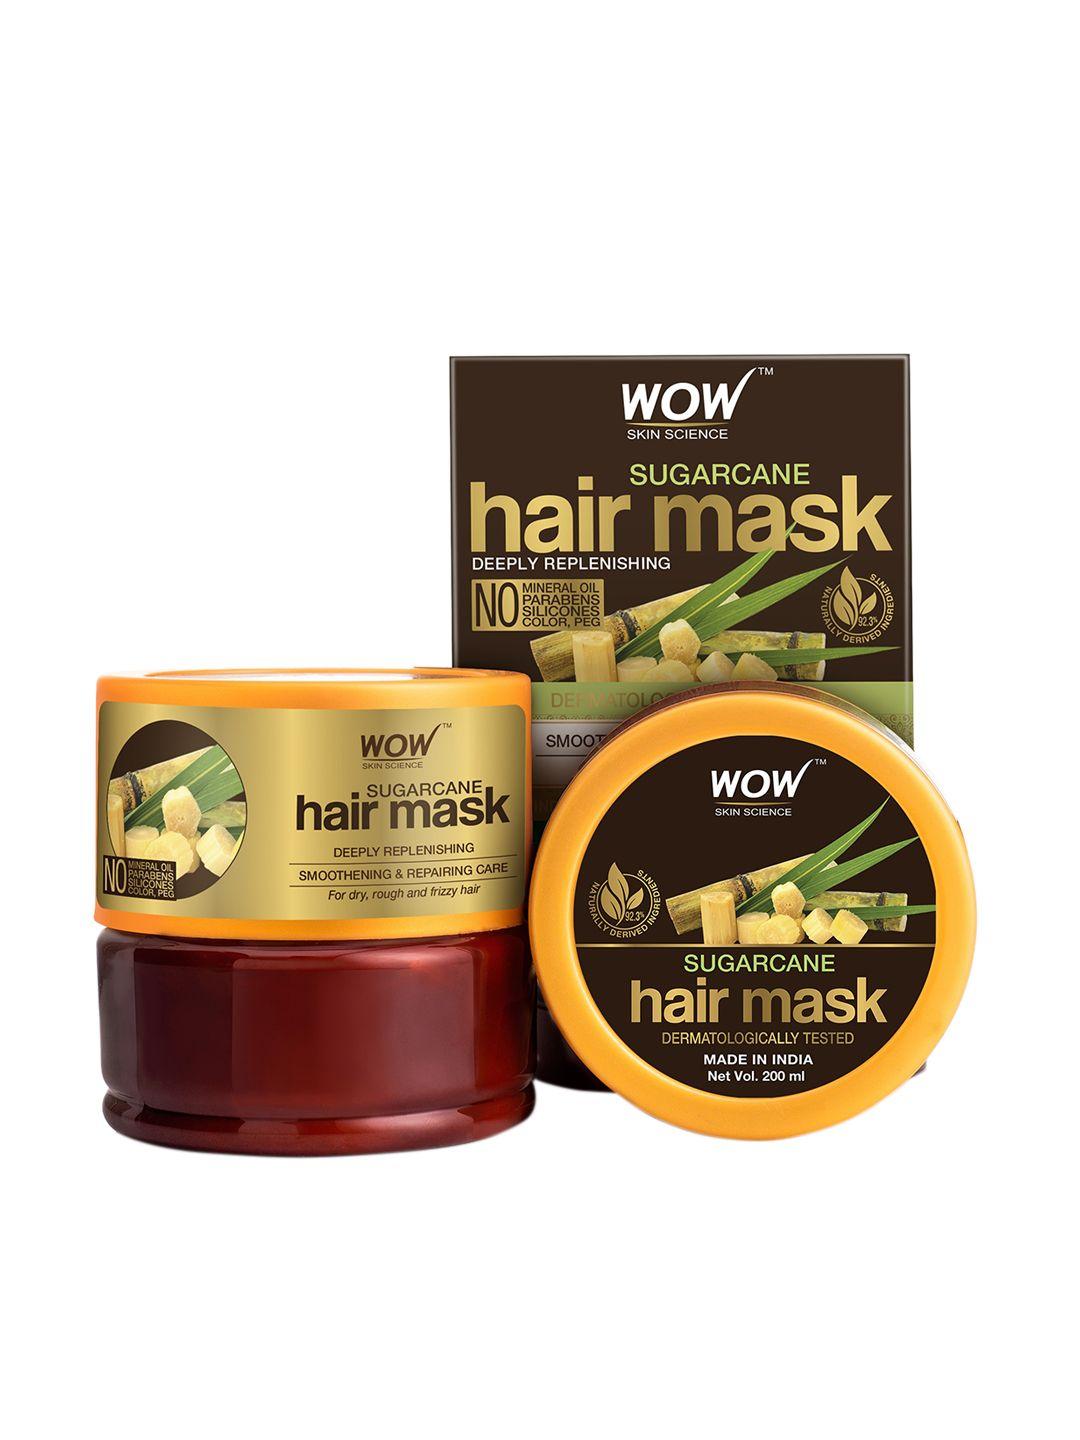 wow skin science deeply replenishing sugarcane hair mask - 200 ml